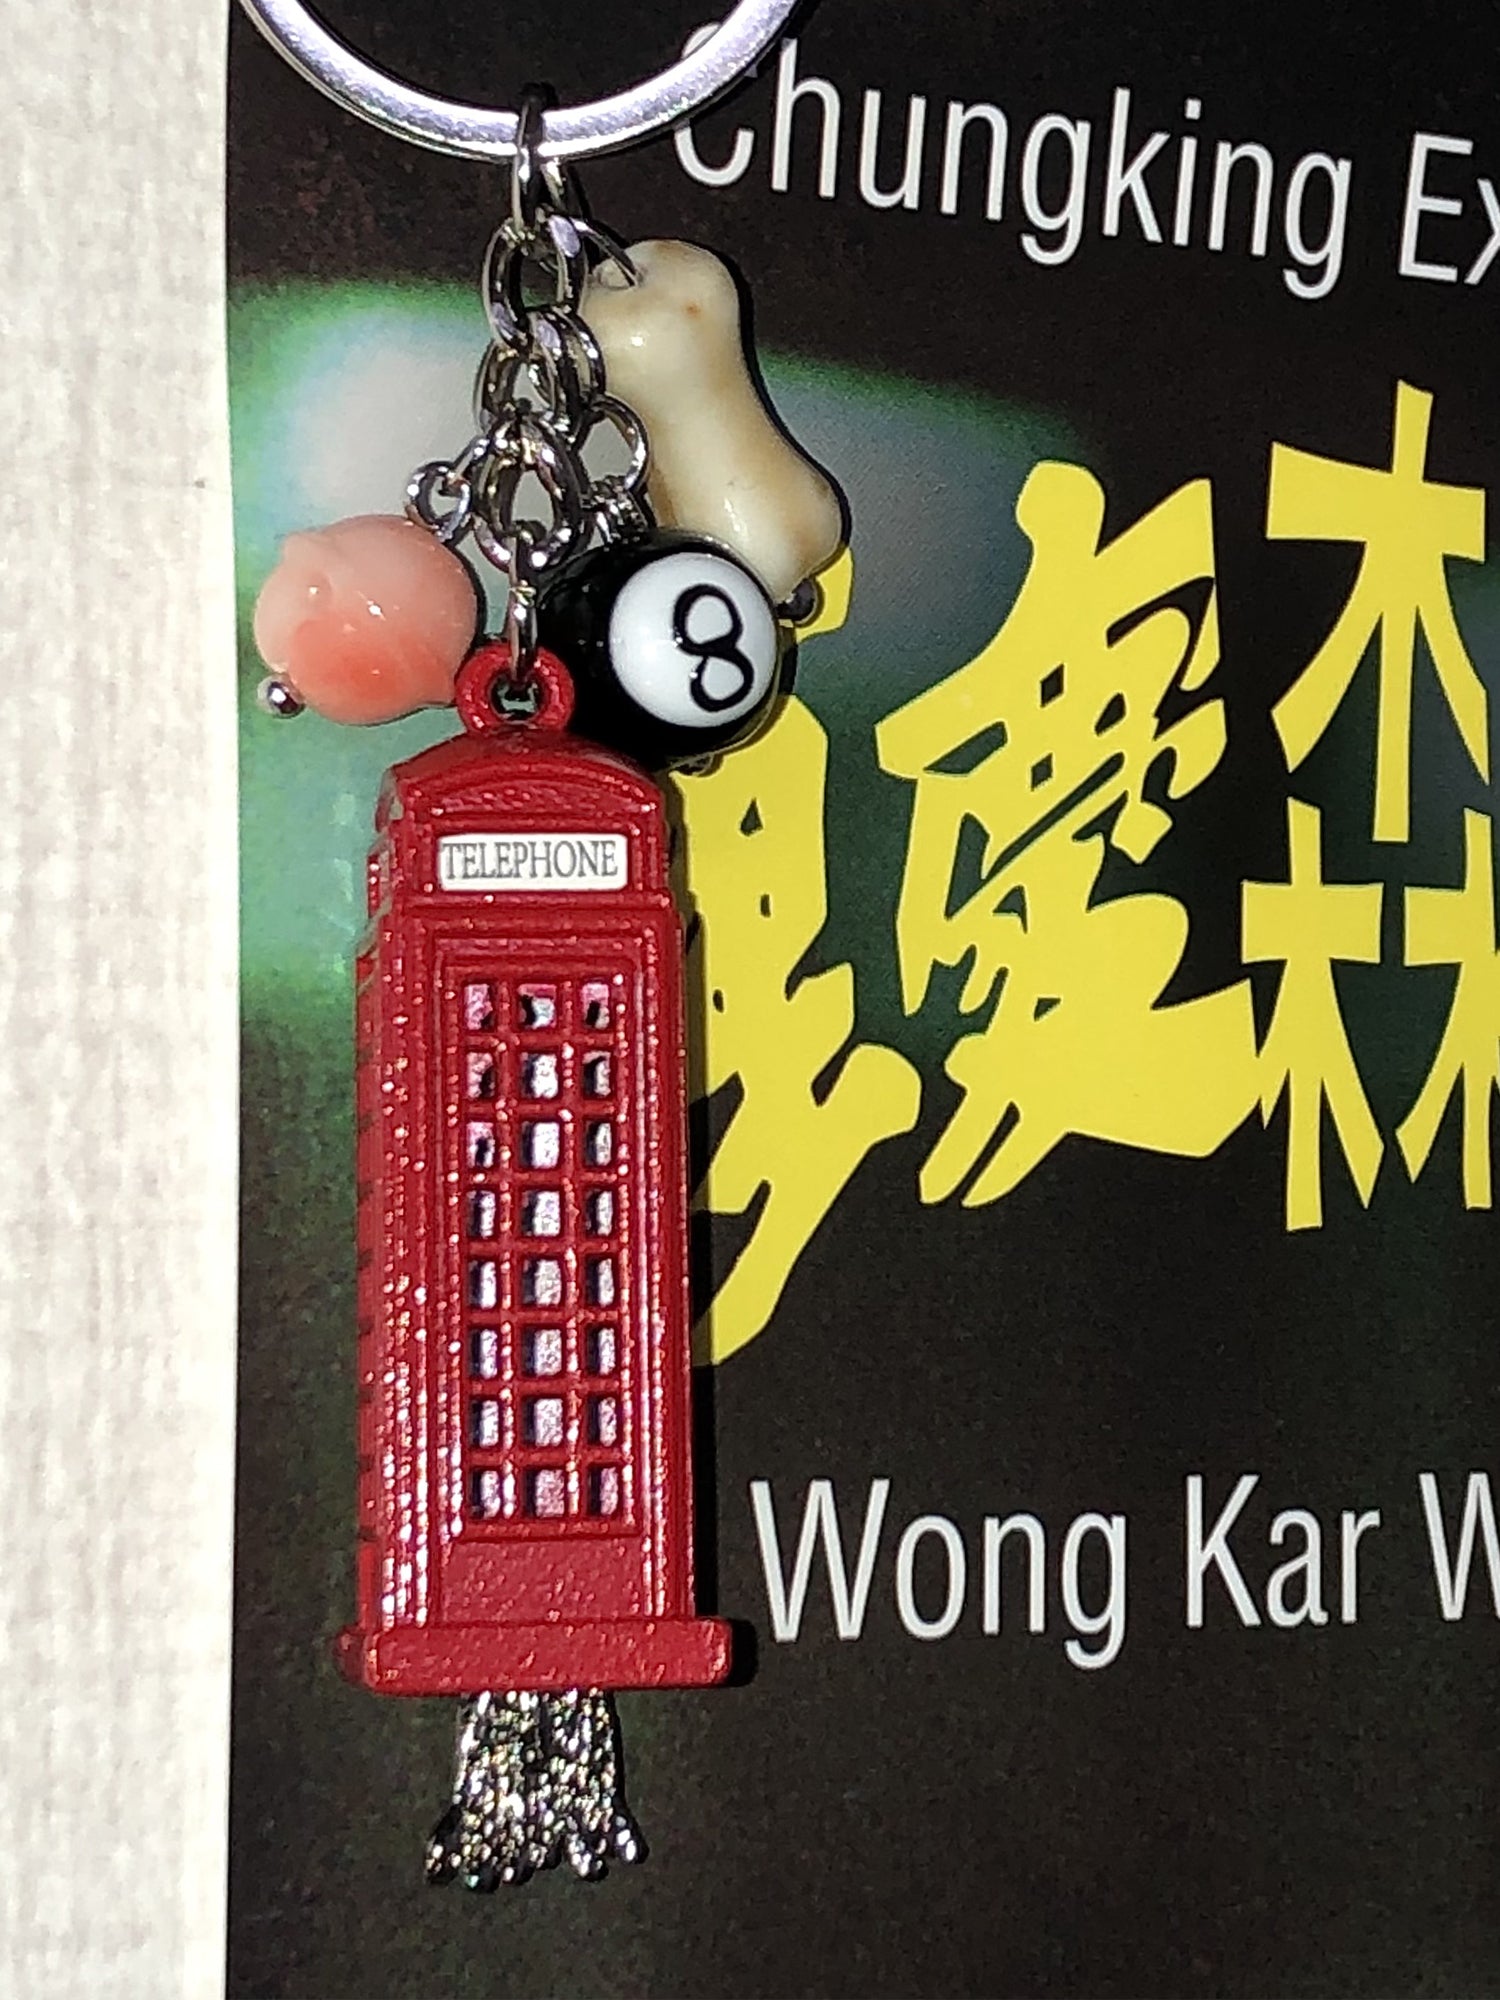 magic world phone booth key-ring